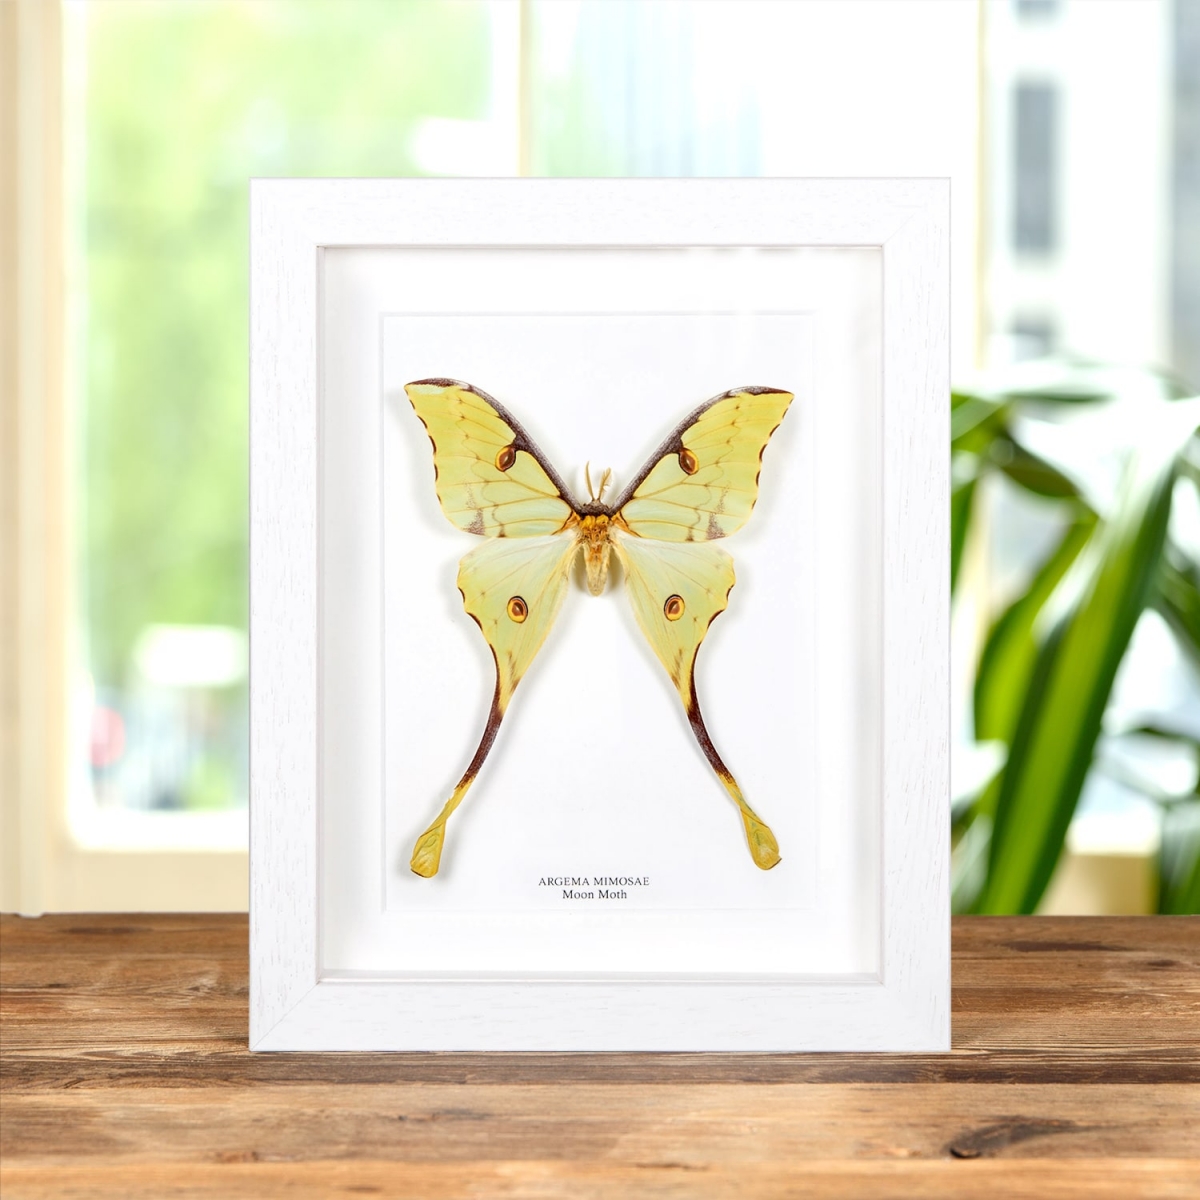 Moon Moth in Box Frame (Argema mimosae)